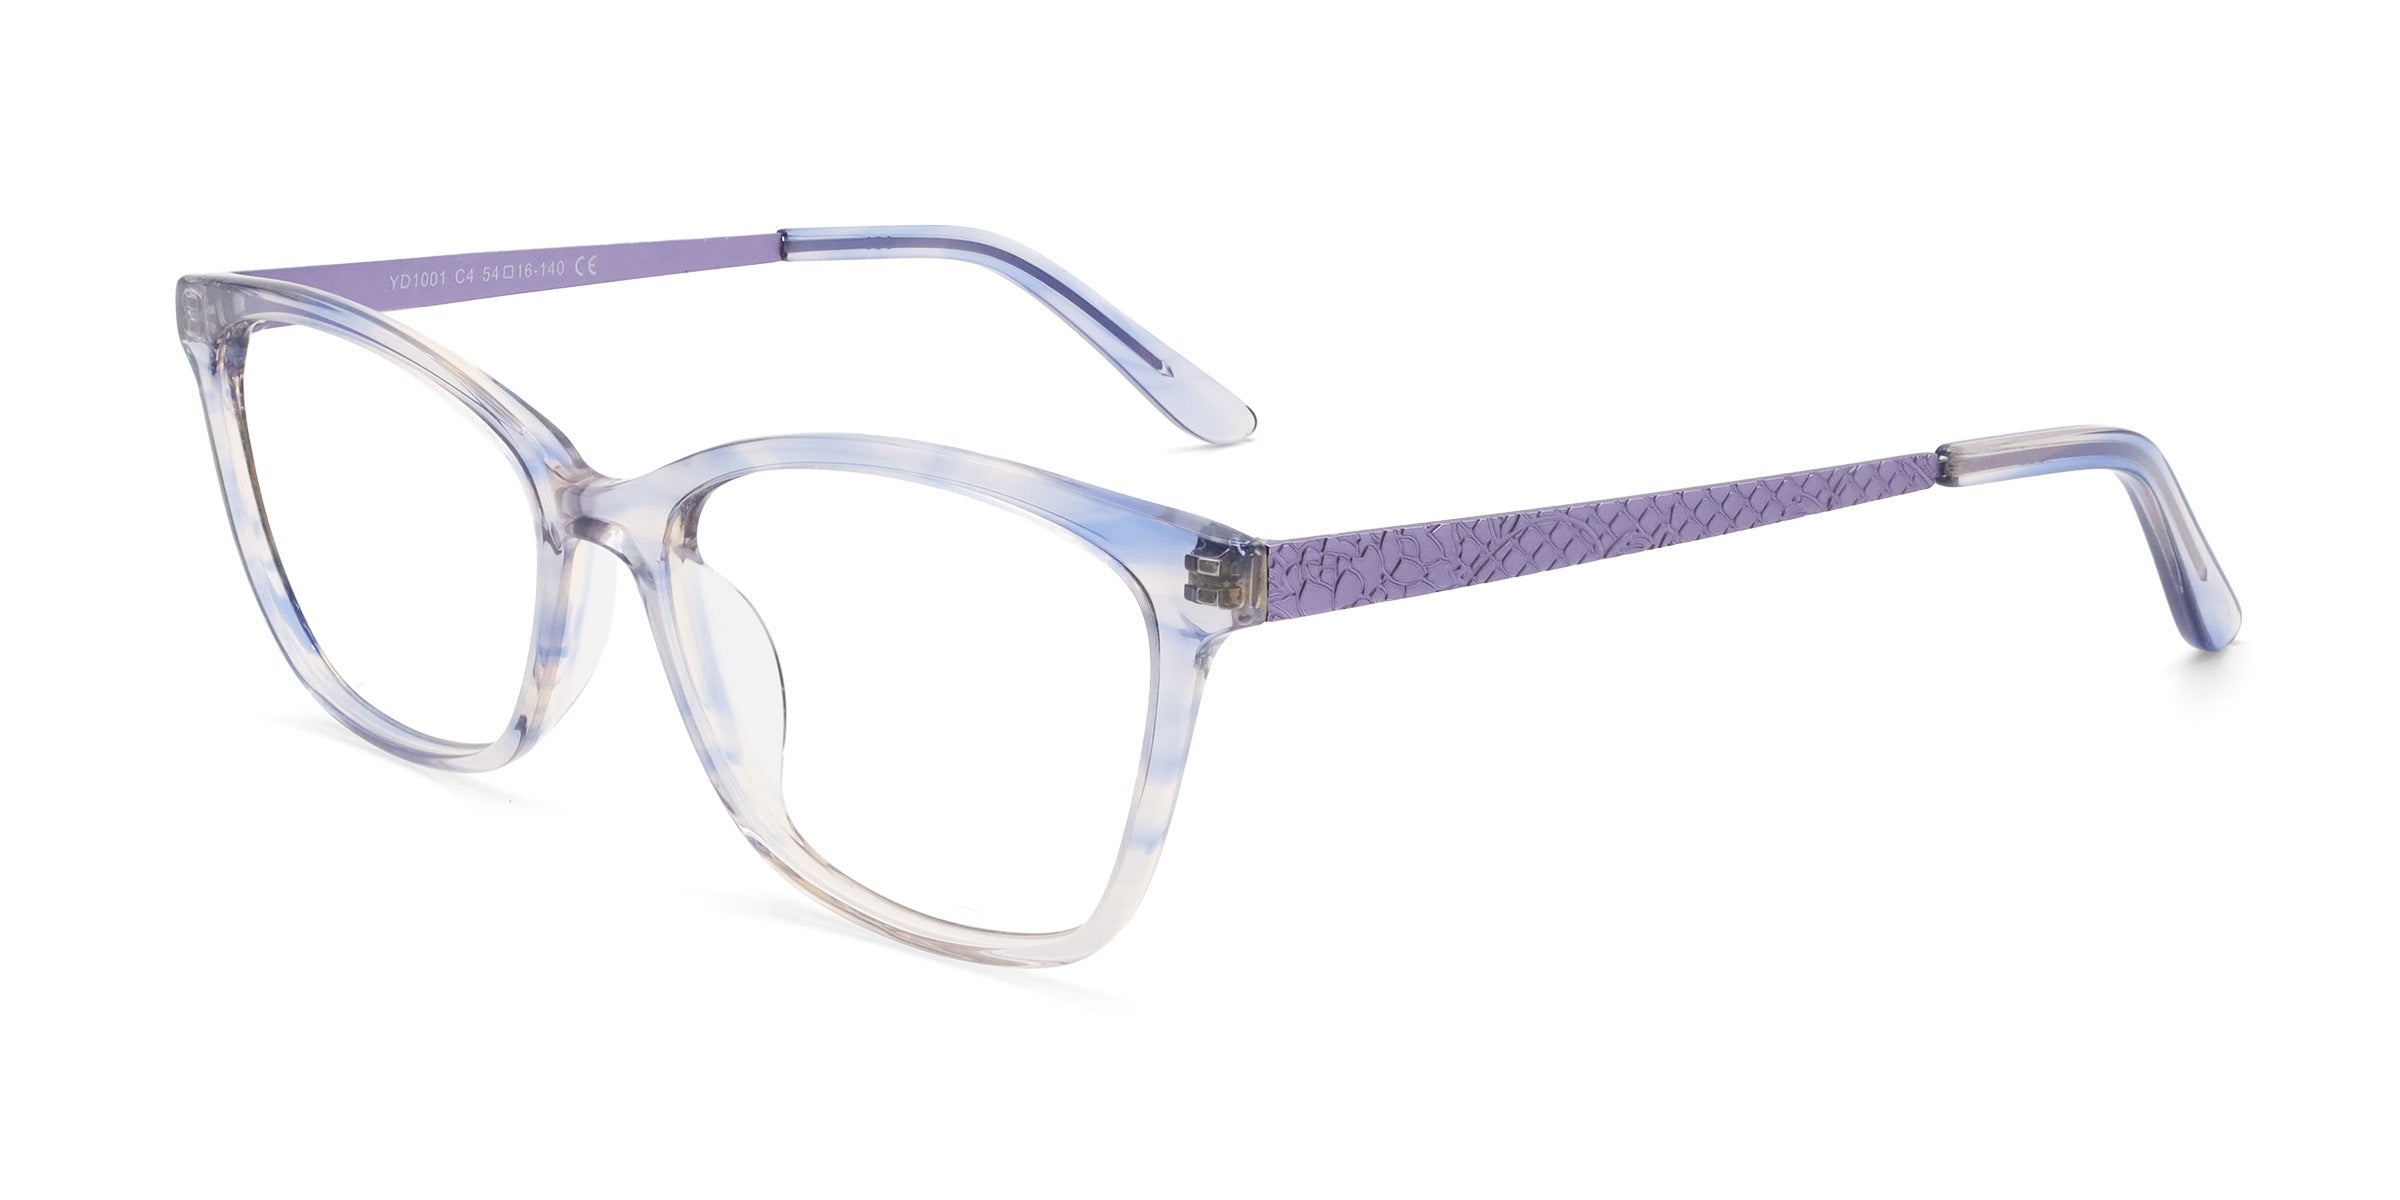 onward rectangle purple eyeglasses frames angled view